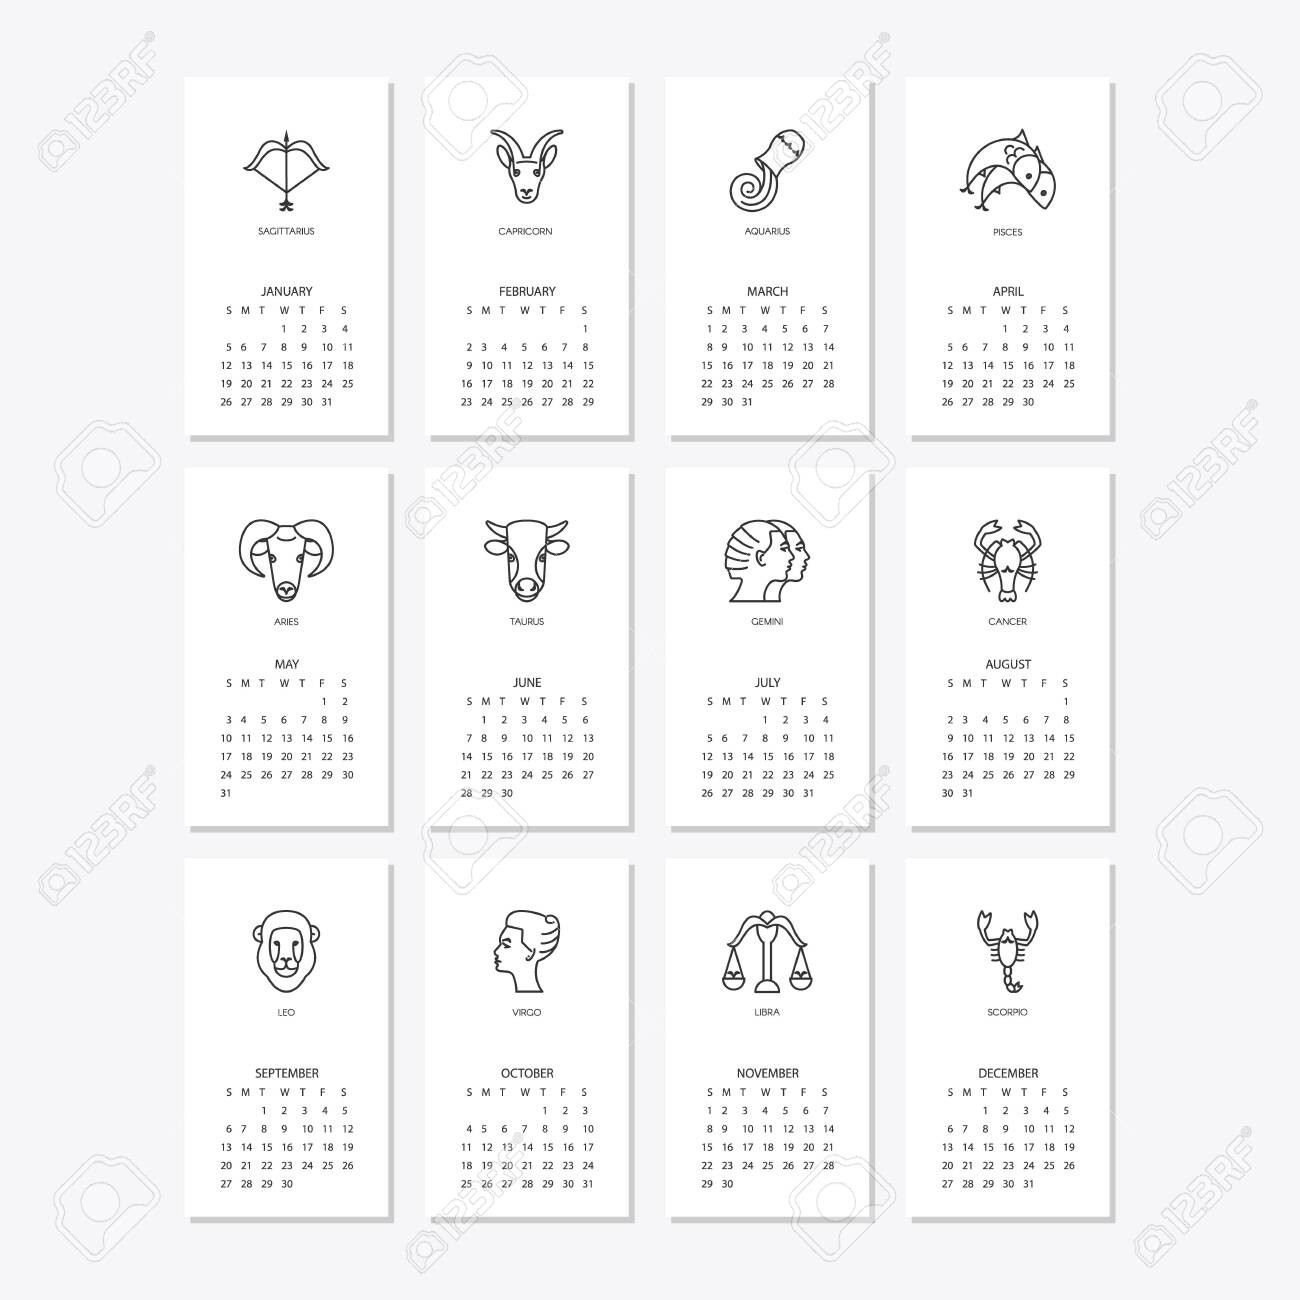 Calendar 2020 With Horoscope Signs Zodiac Symbols Set  2020 Calendar With Zodiac Signs